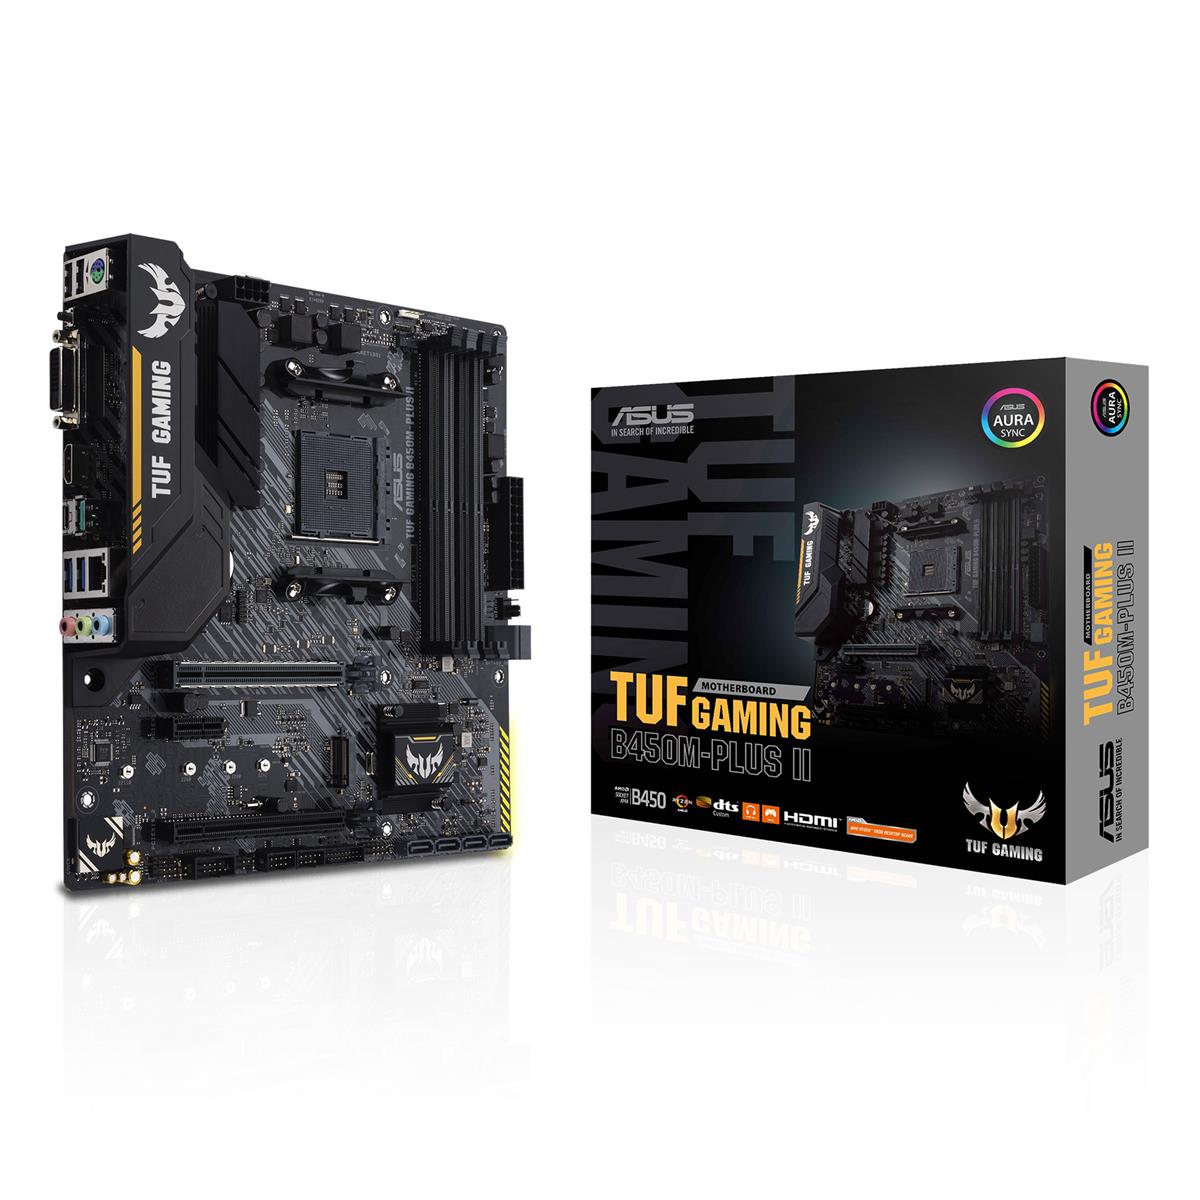 Image of ASUS TUF GAMING B450M-PLUS II AMD Socket AM4 microATX Gaming Motherboard